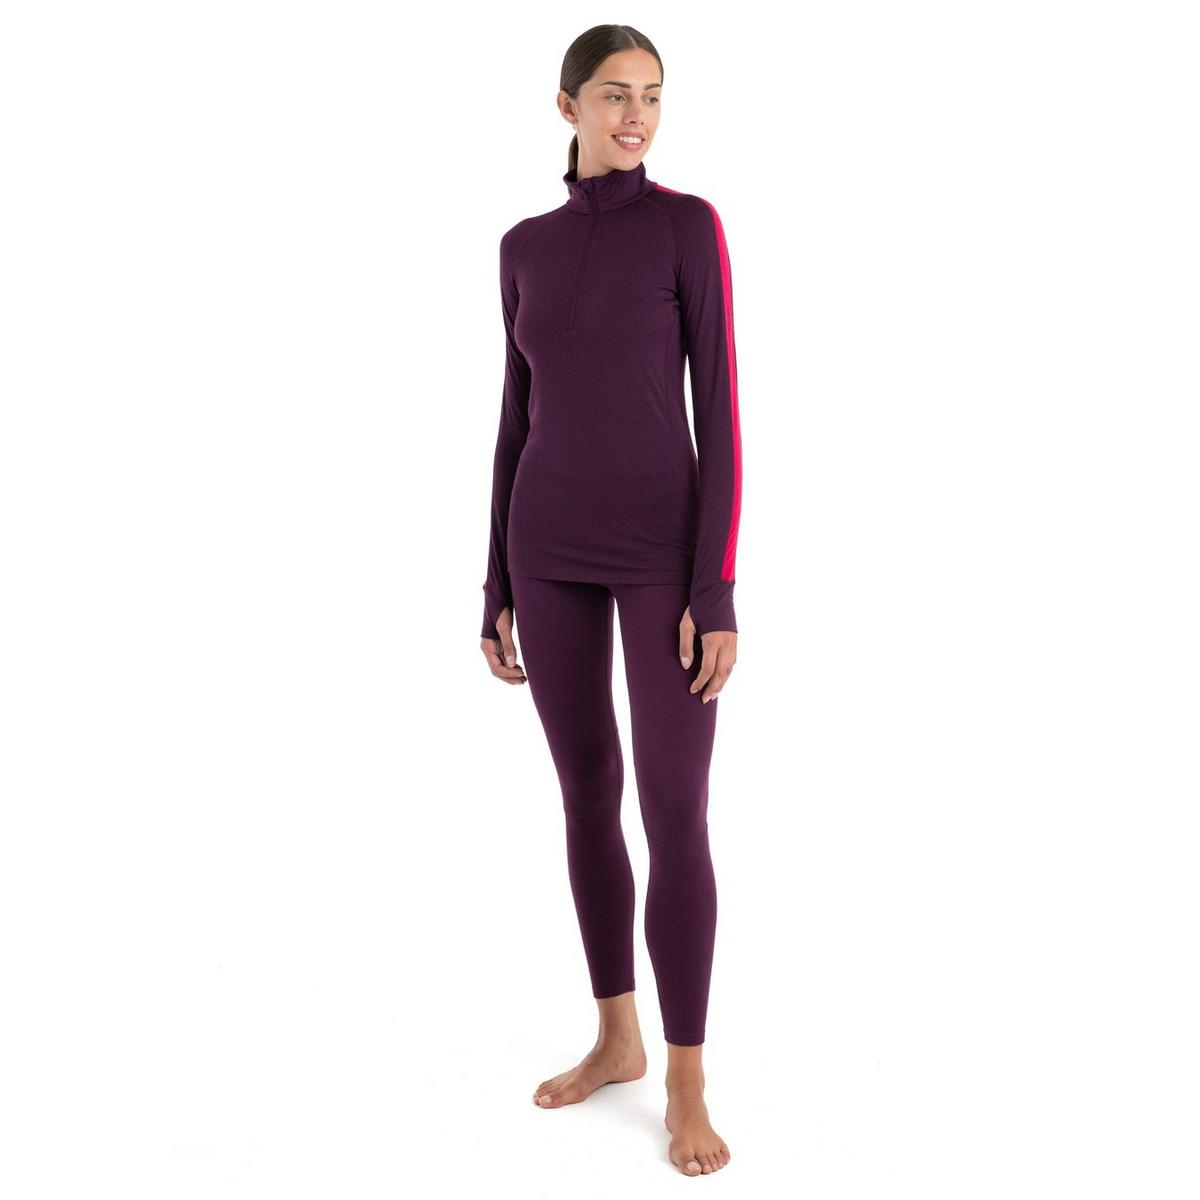 Icebreaker Women's 200 Merino Zoneknit Half Zip Long Sleeve - Purple